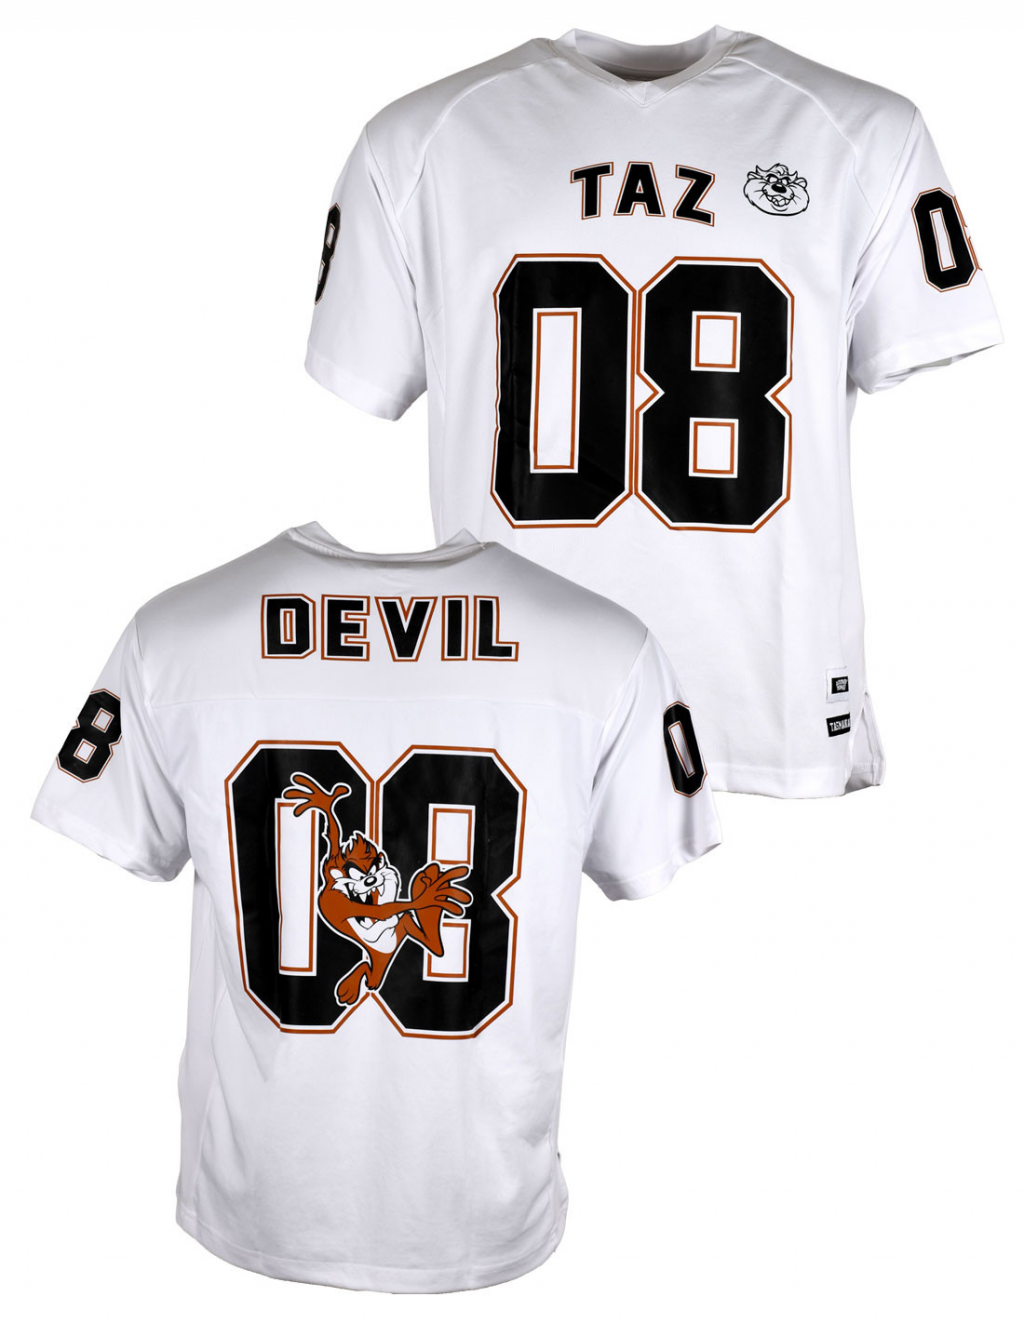 LOONEY TUNES - Taz The Devil - T-Shirt Sports US Replica unisex (S)